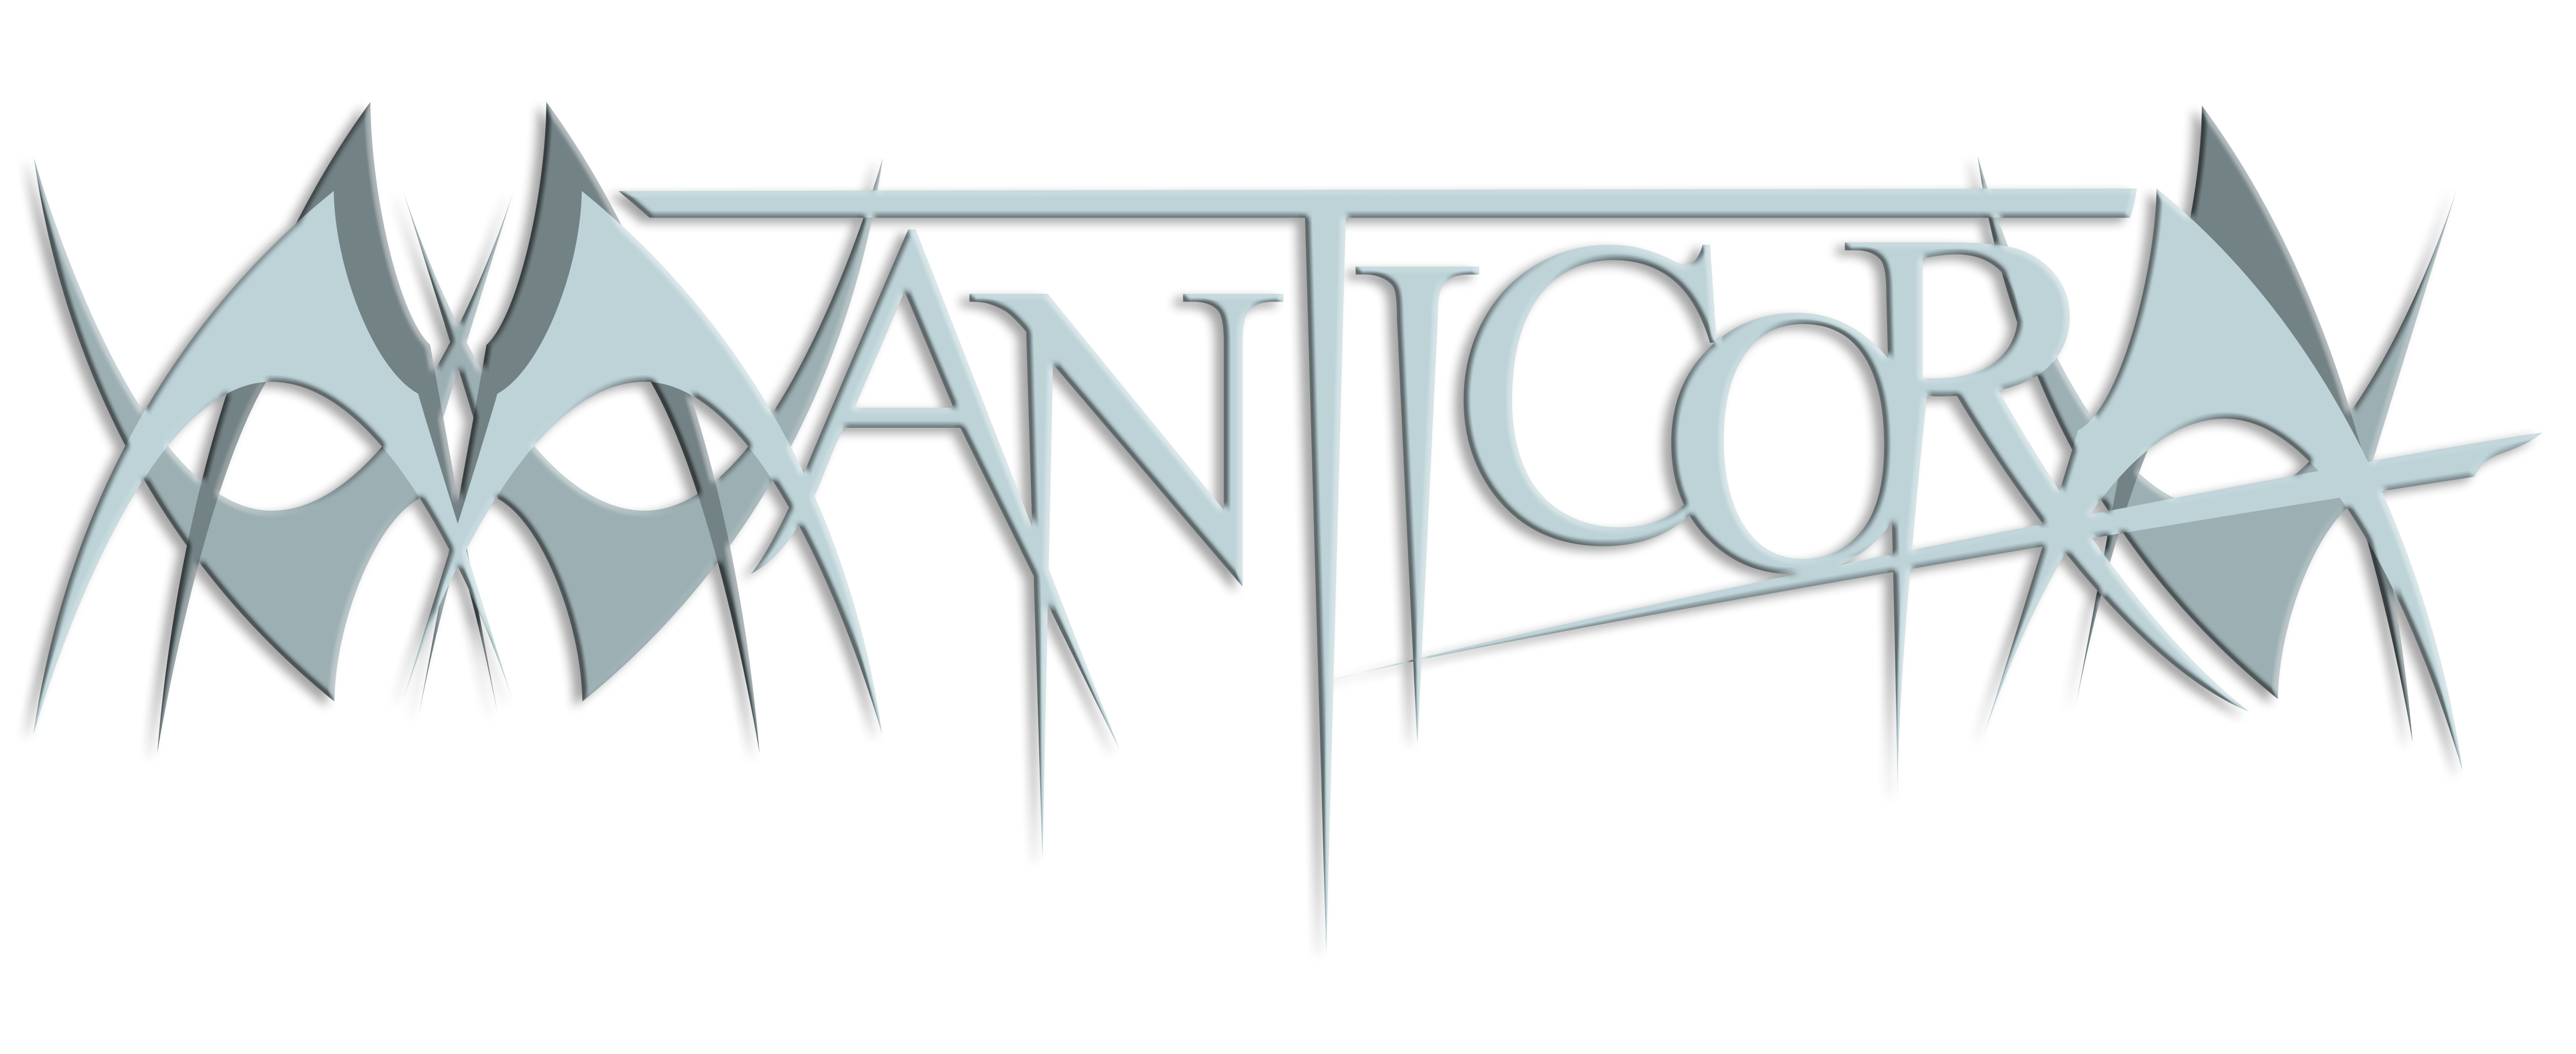 Manticora Official website